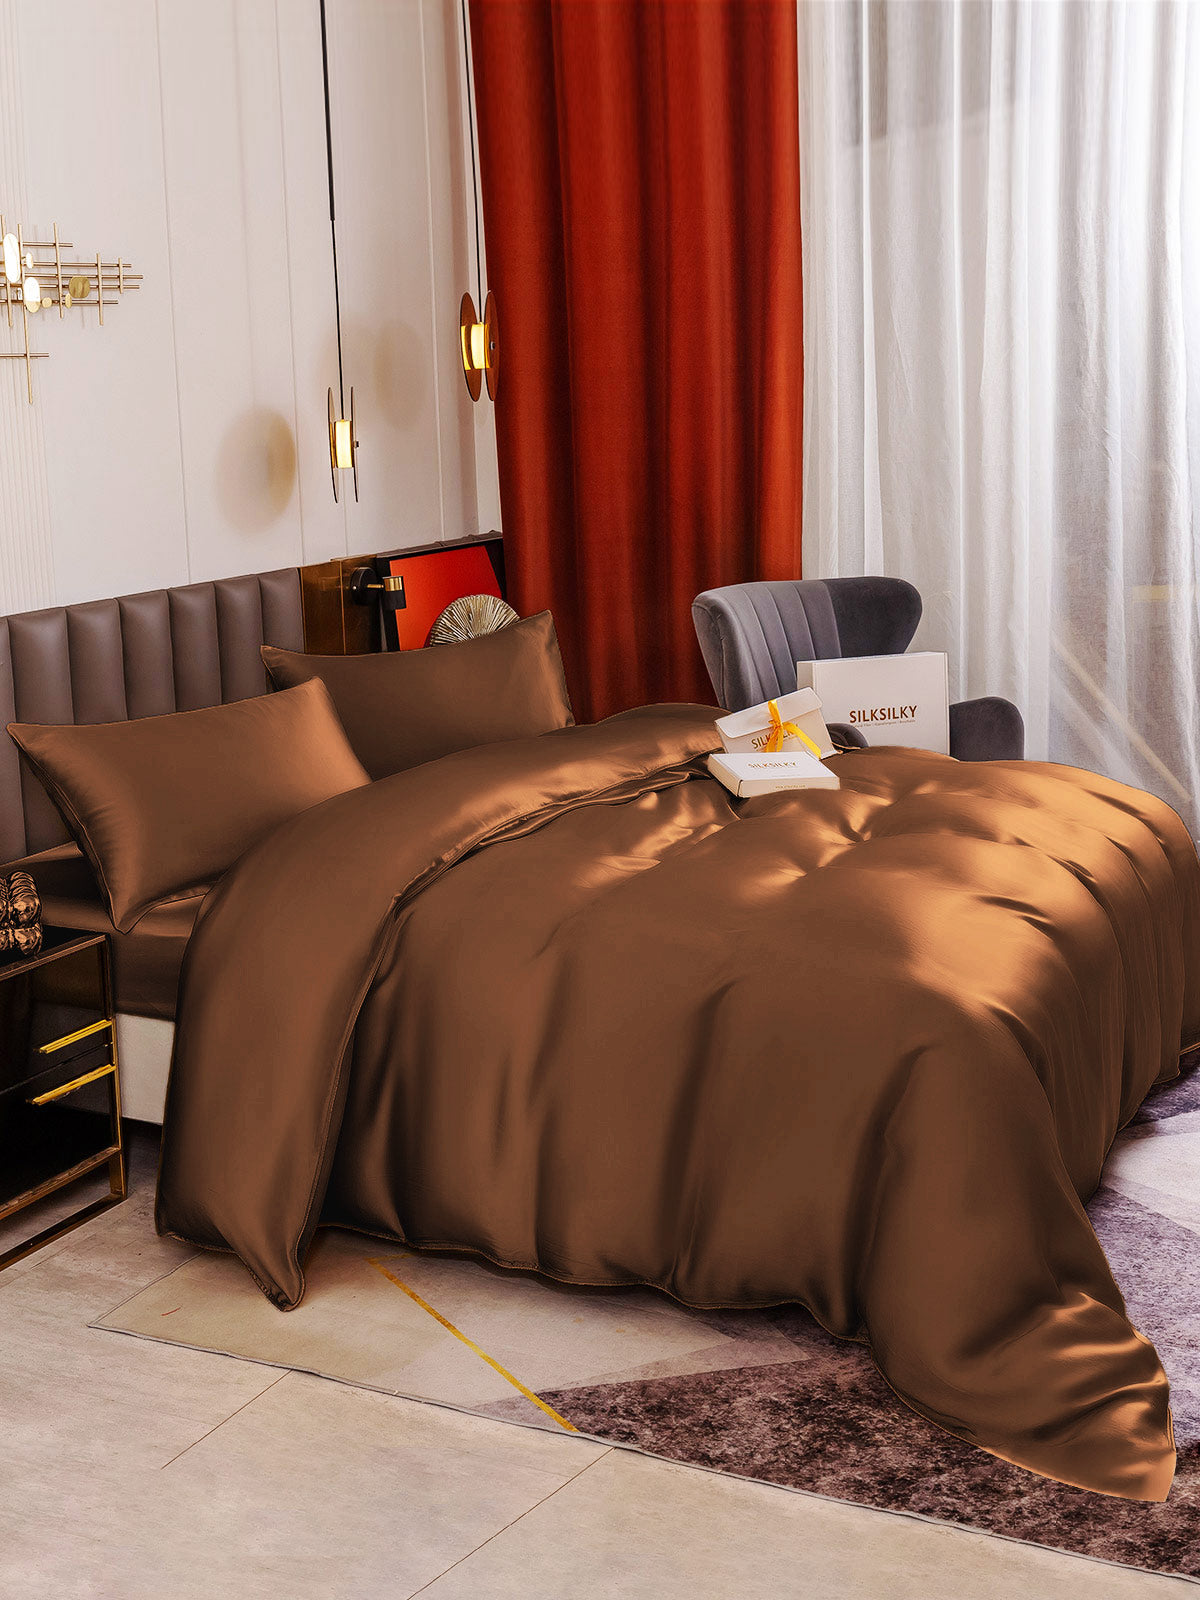 Silk Bedding Set including Duvet Cover + Fitted Sheet + 2 Pillowcases